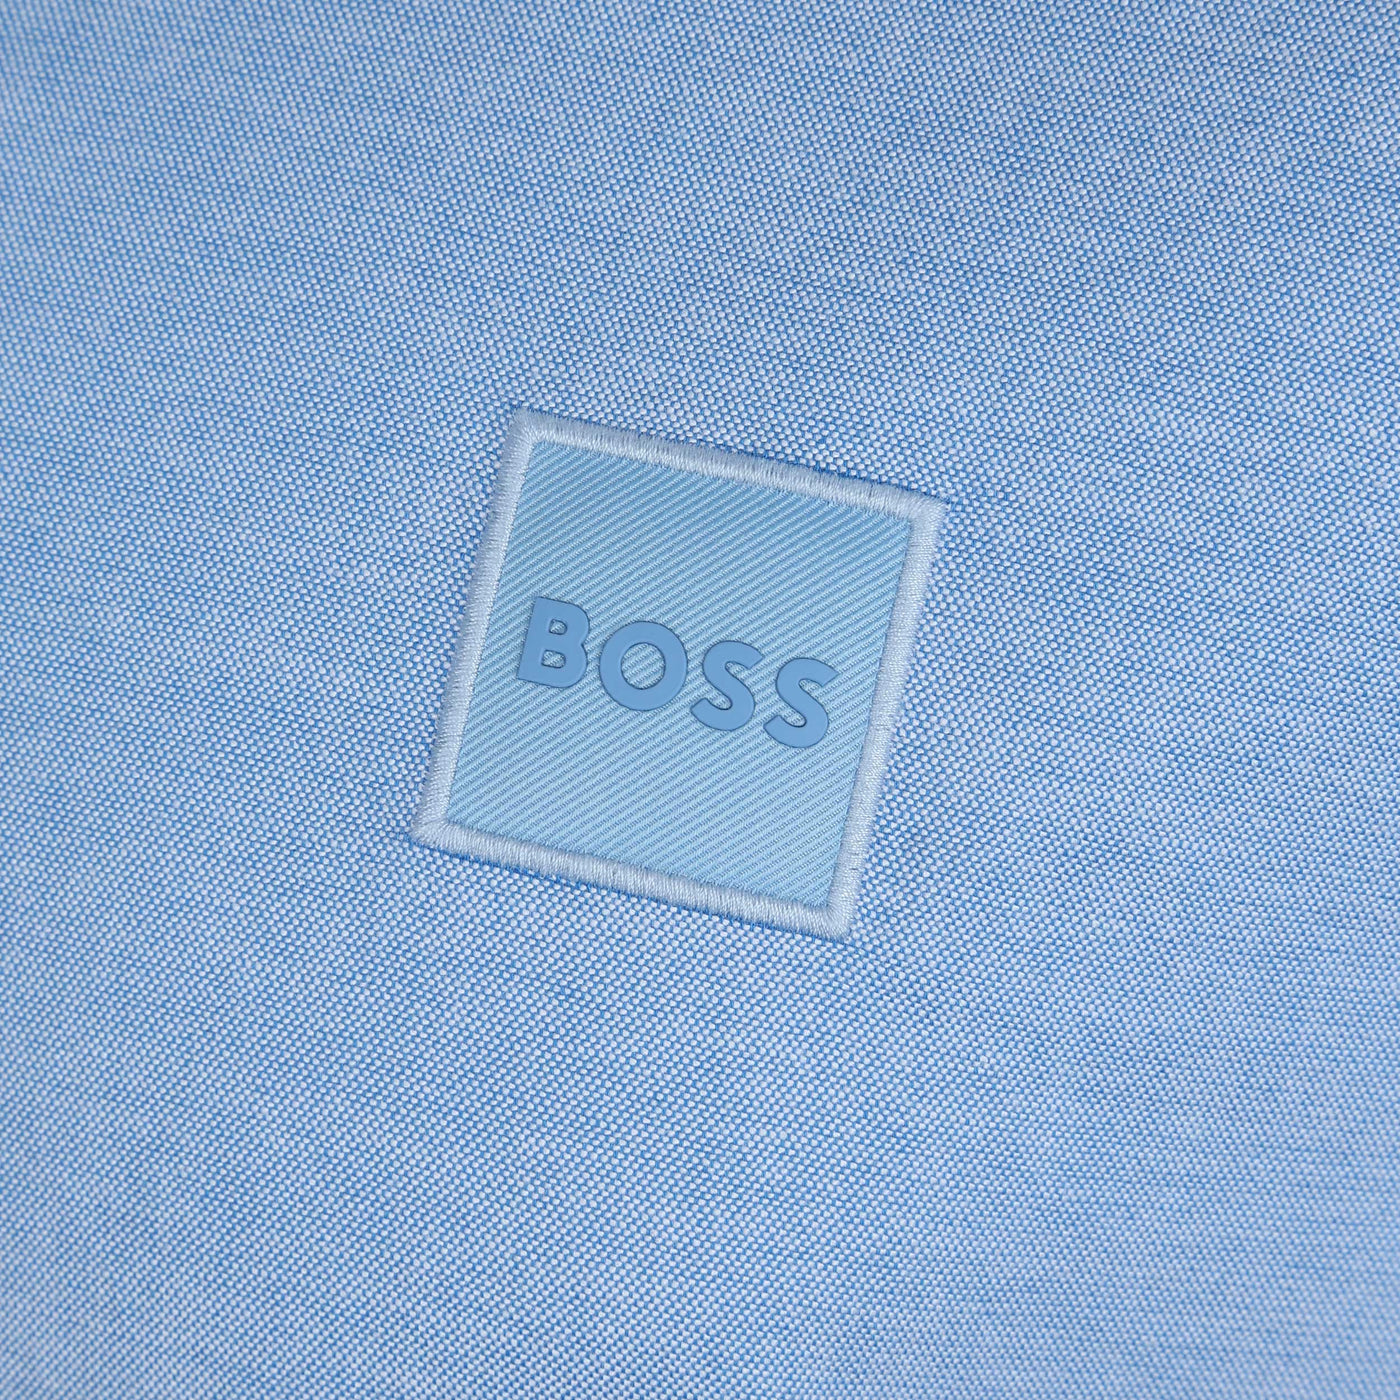 BOSS Mabsoot 2 Shirt in Sky Blue